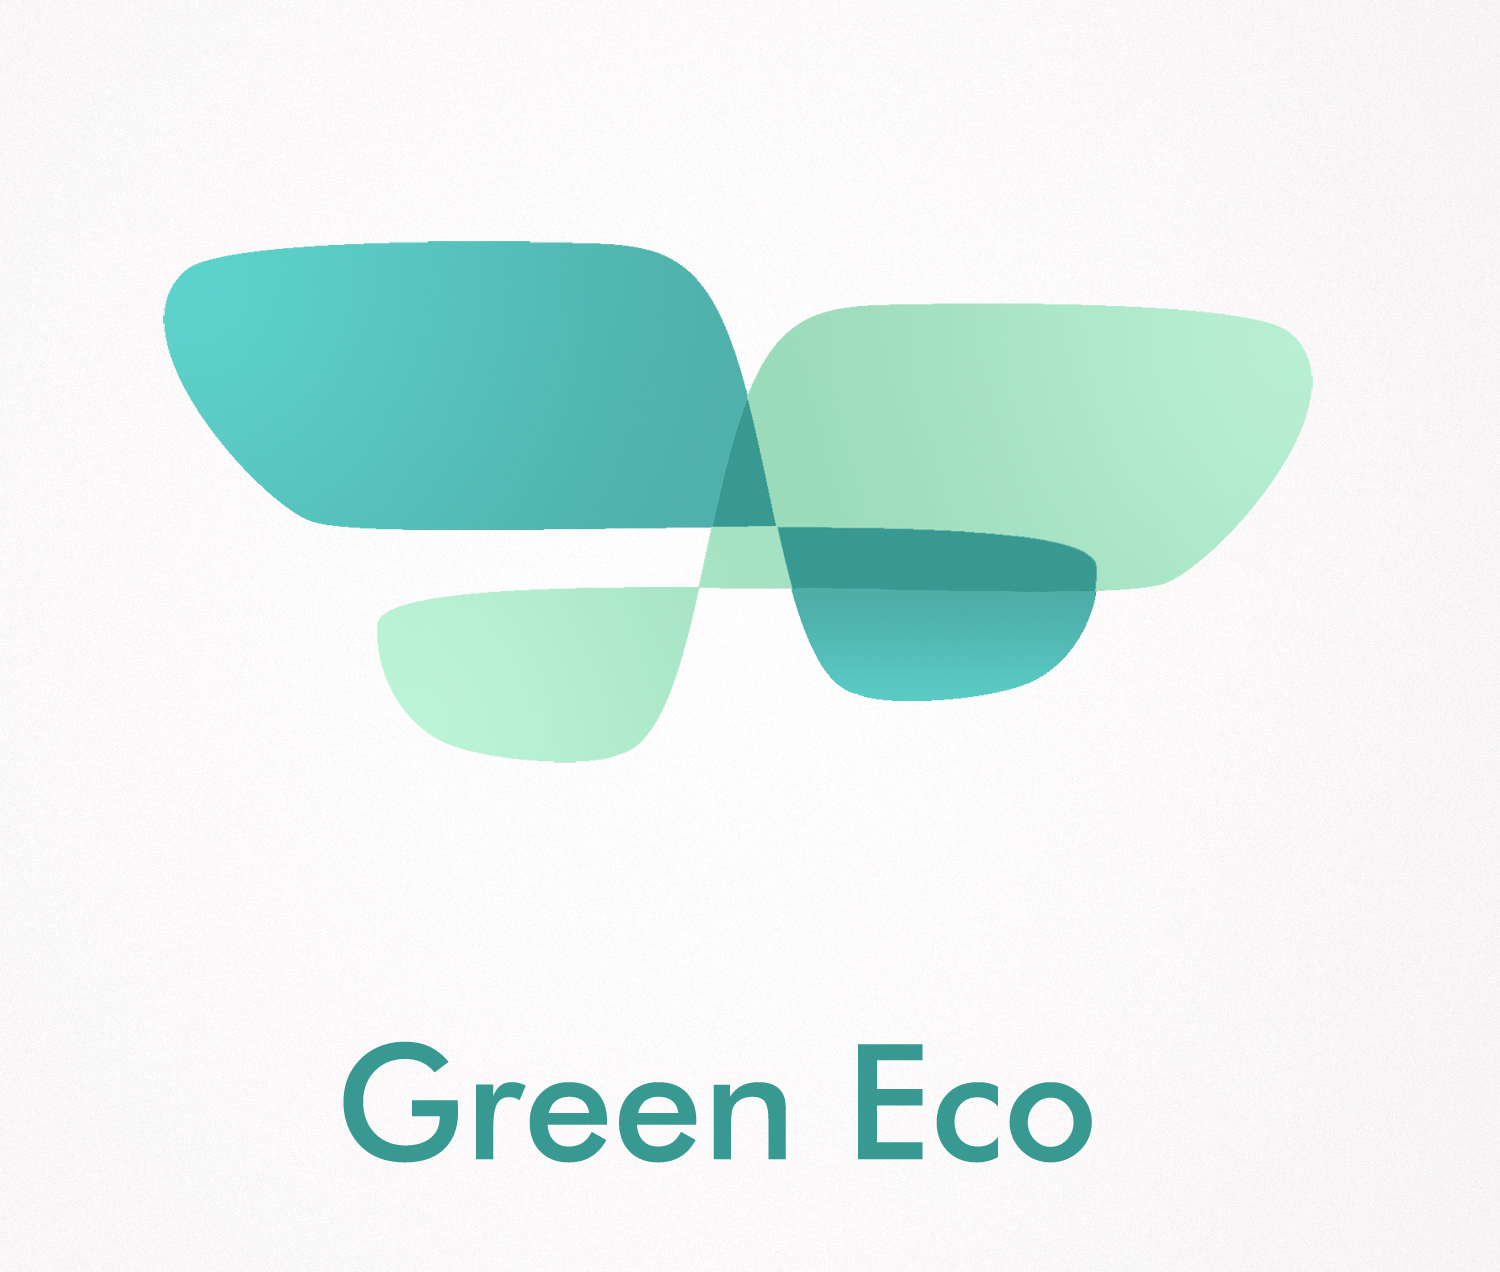 eco green